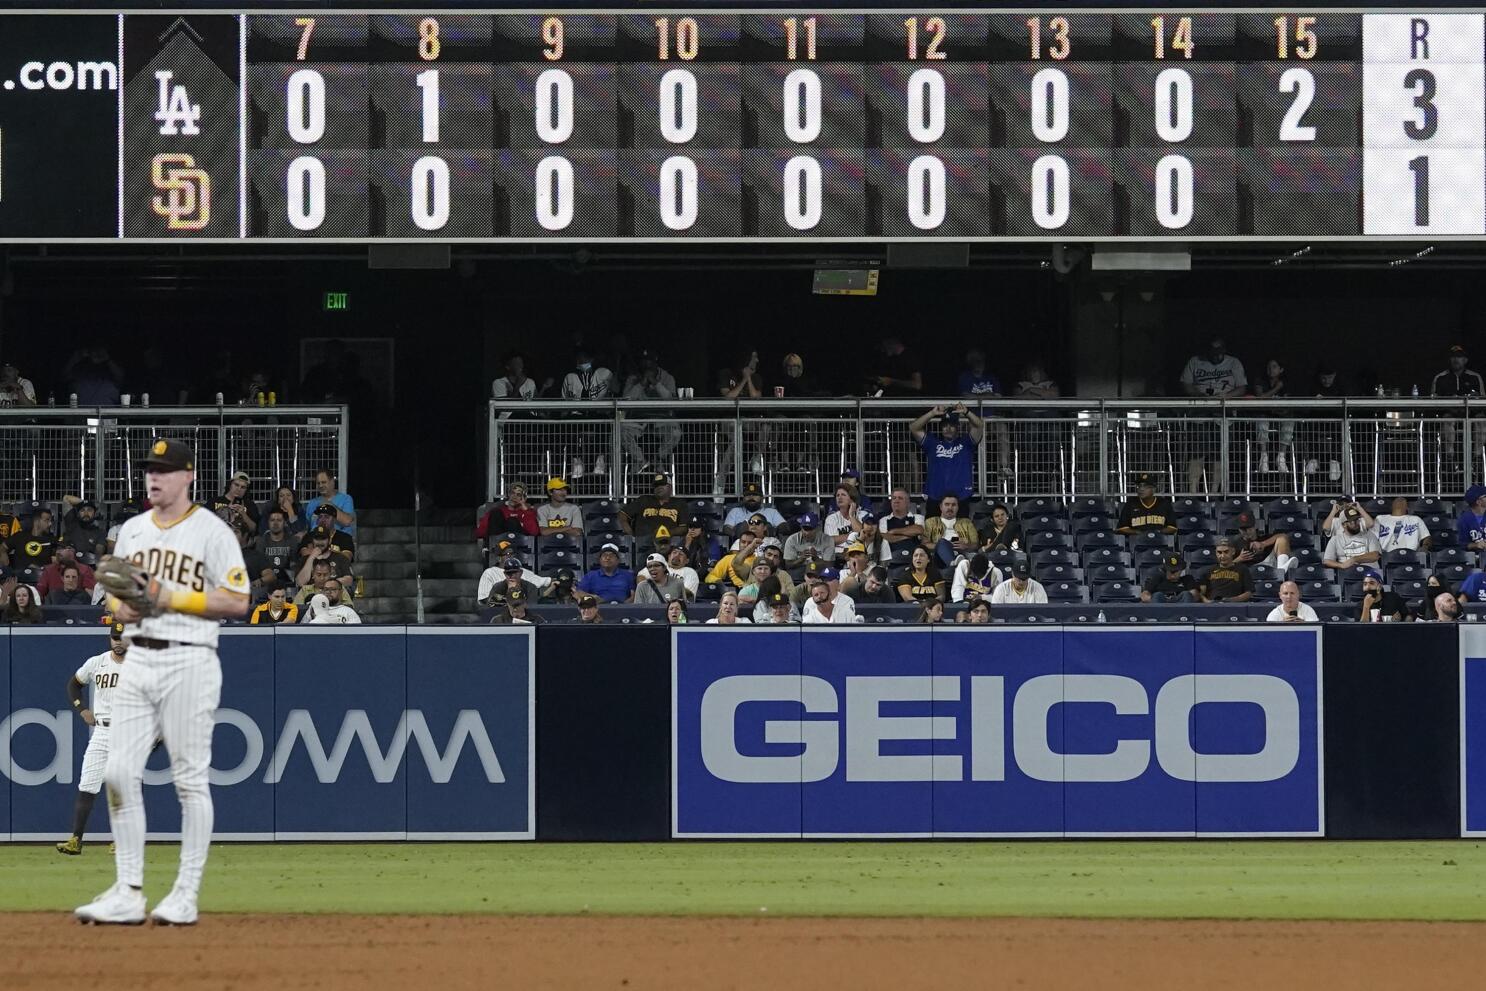 Baseball: Padres' Yu Darvish ties career high with 16th win